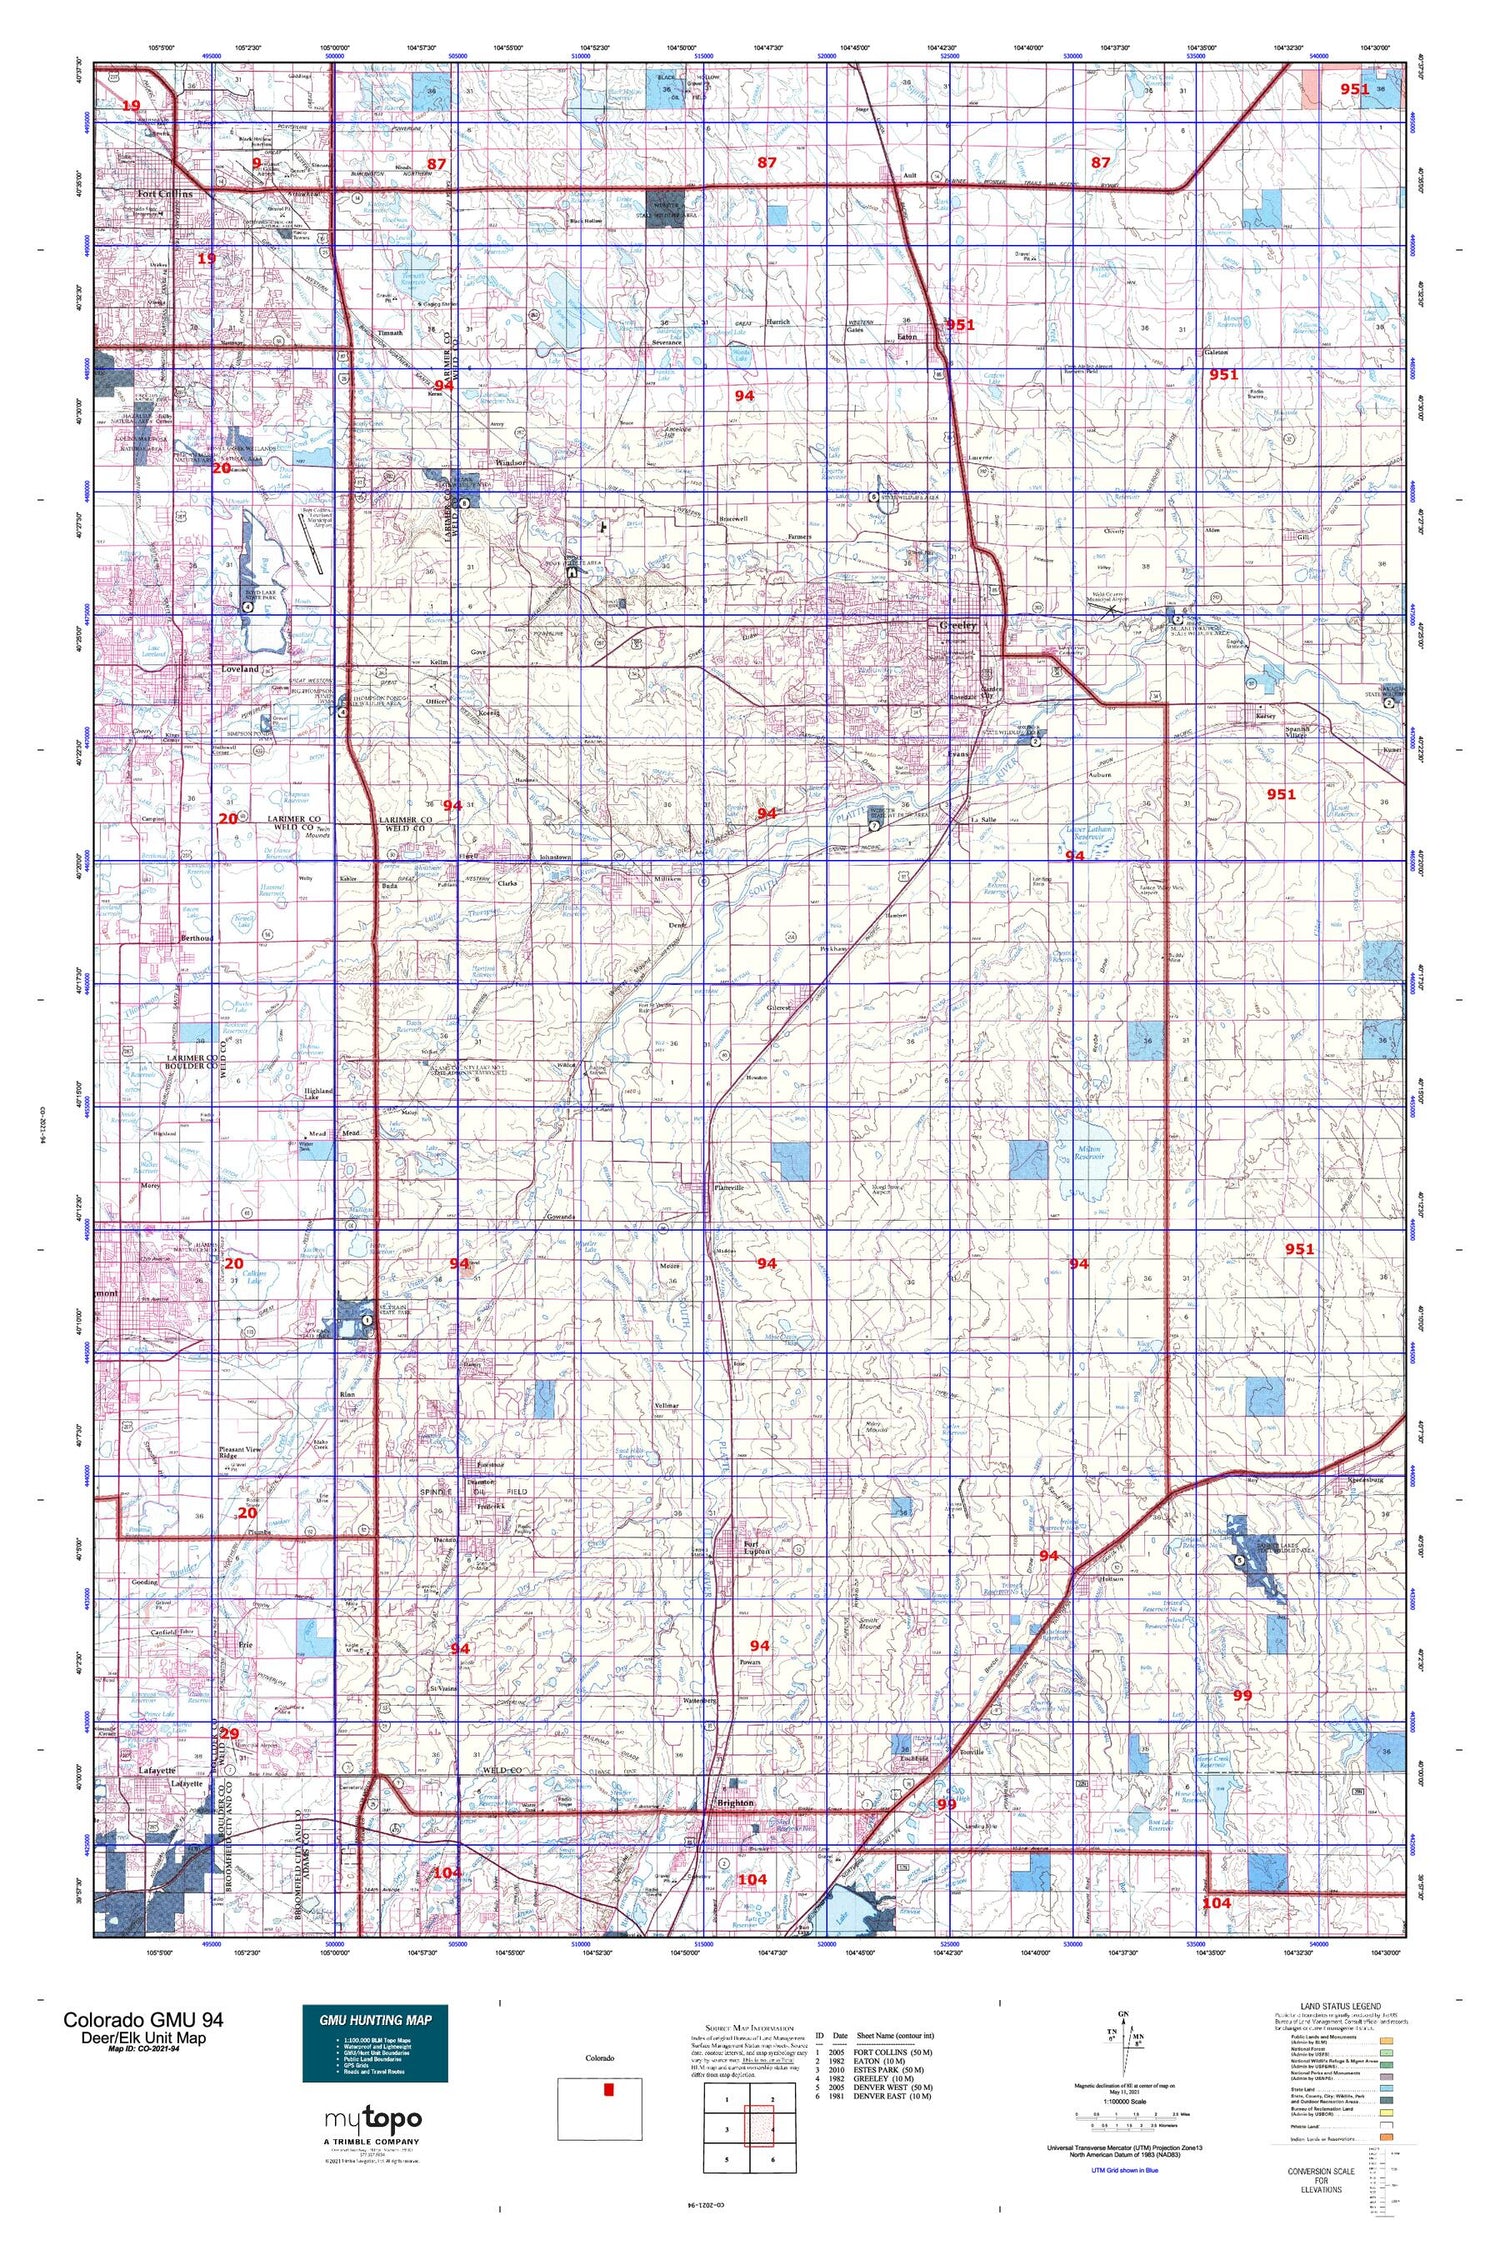 Colorado GMU 94 Map Image